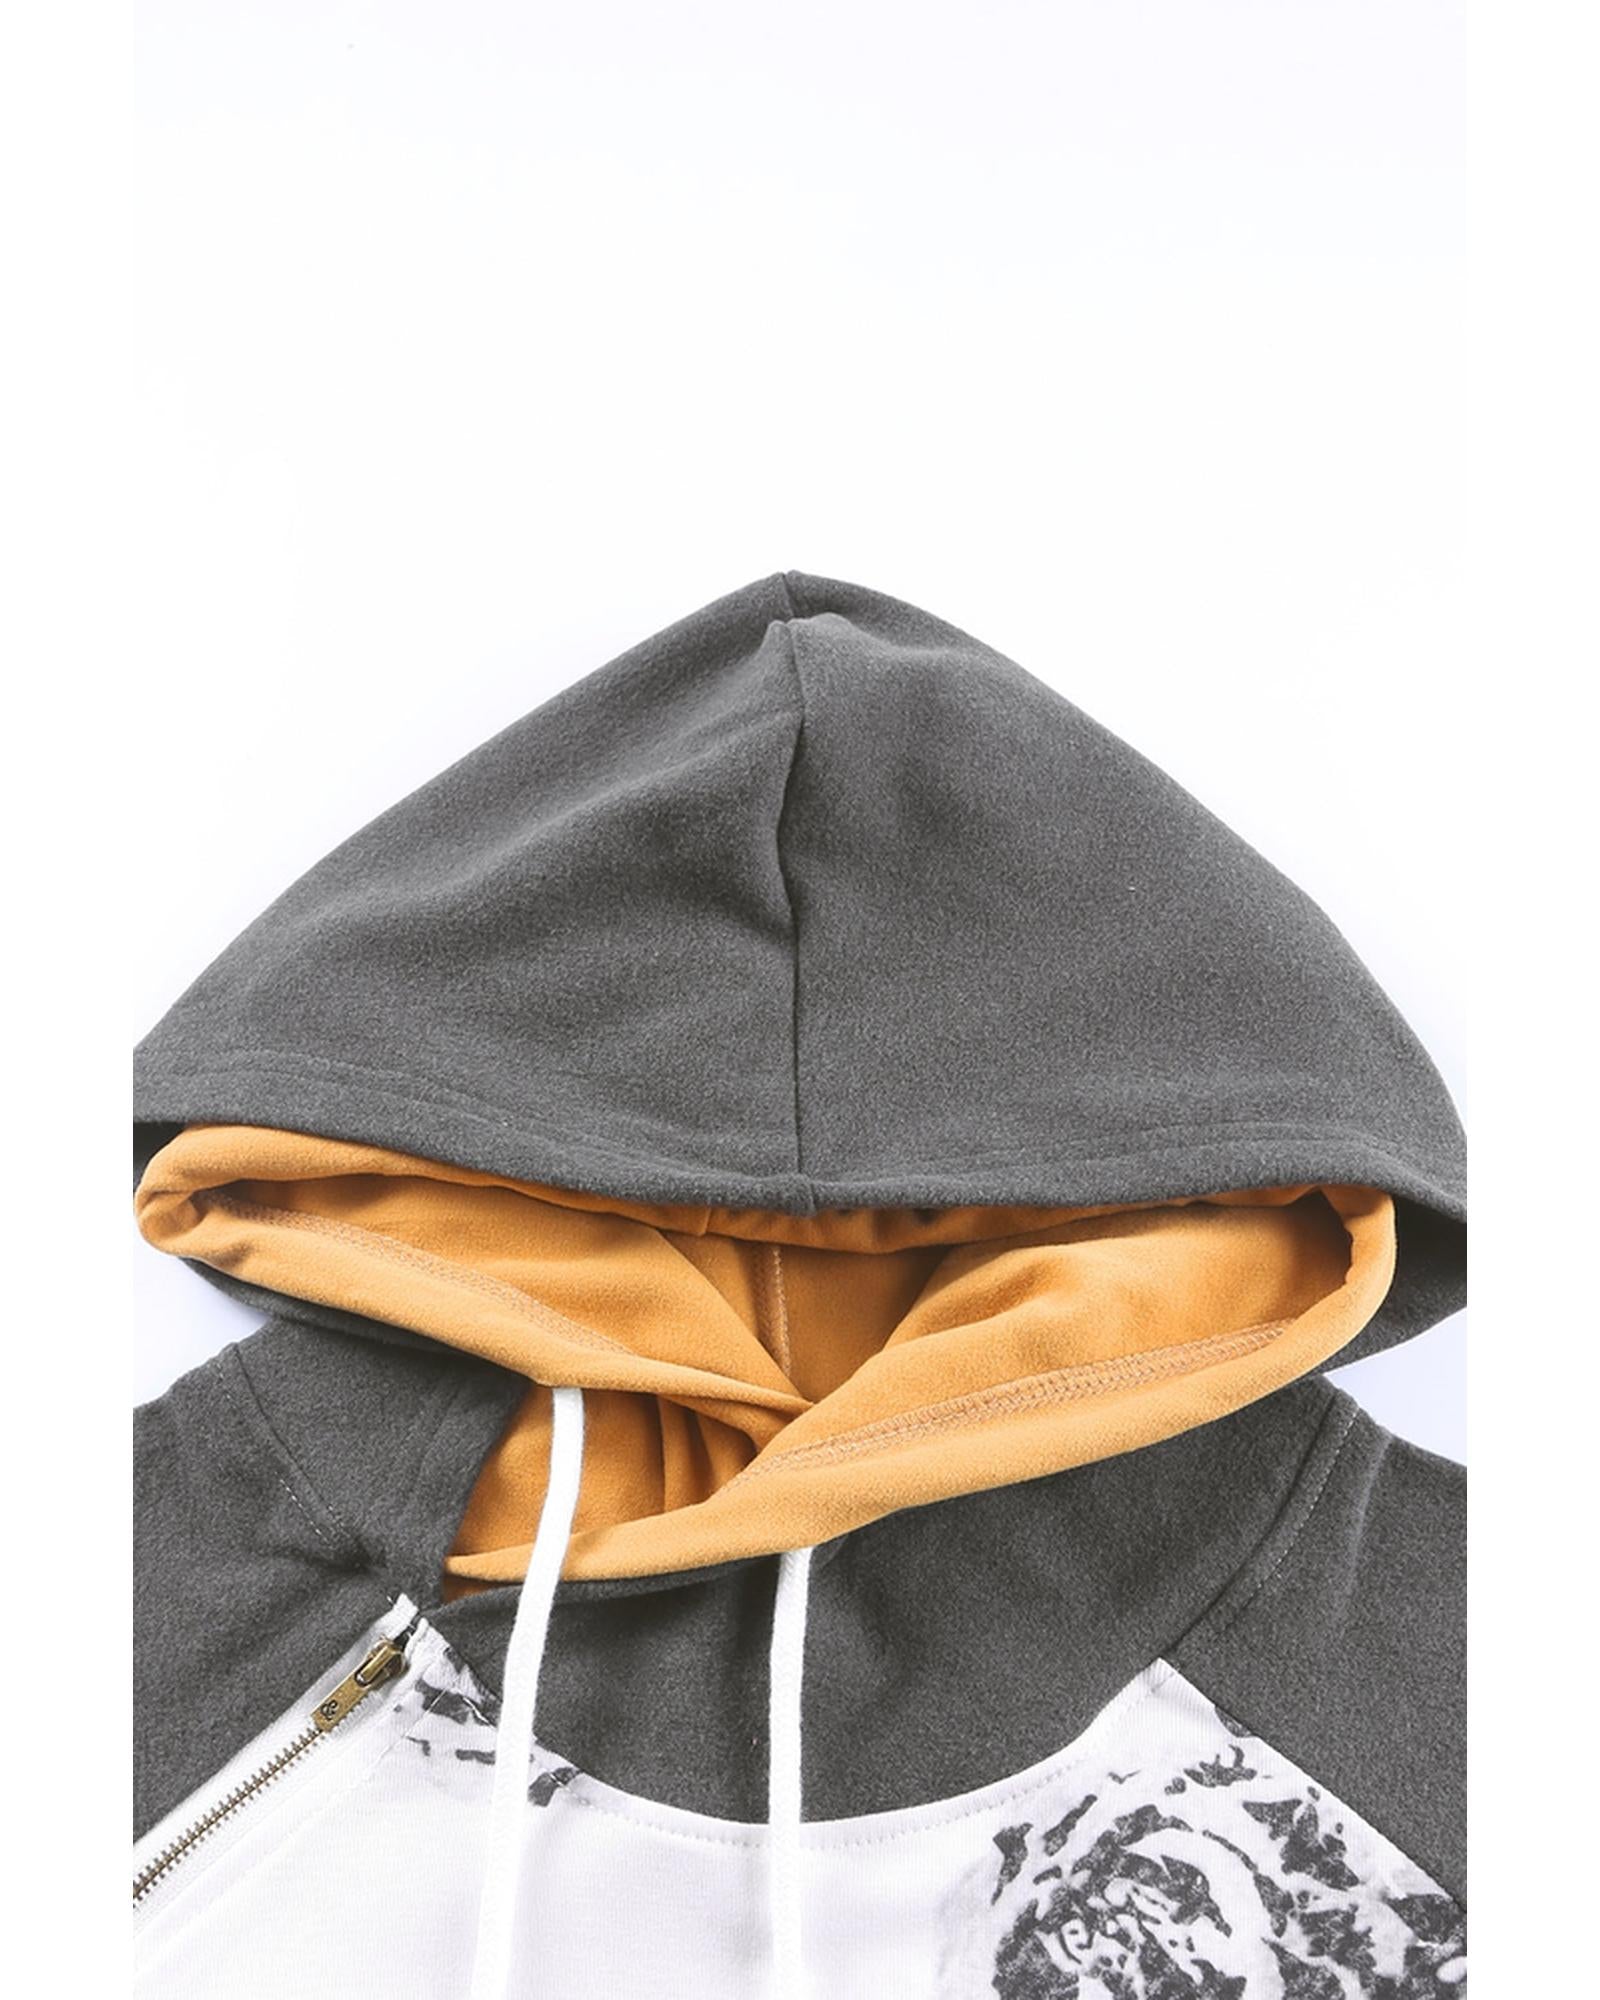 Azura Exchange Raglan Sleeves Double Hood Sweatshirt with Floral Pattern - S